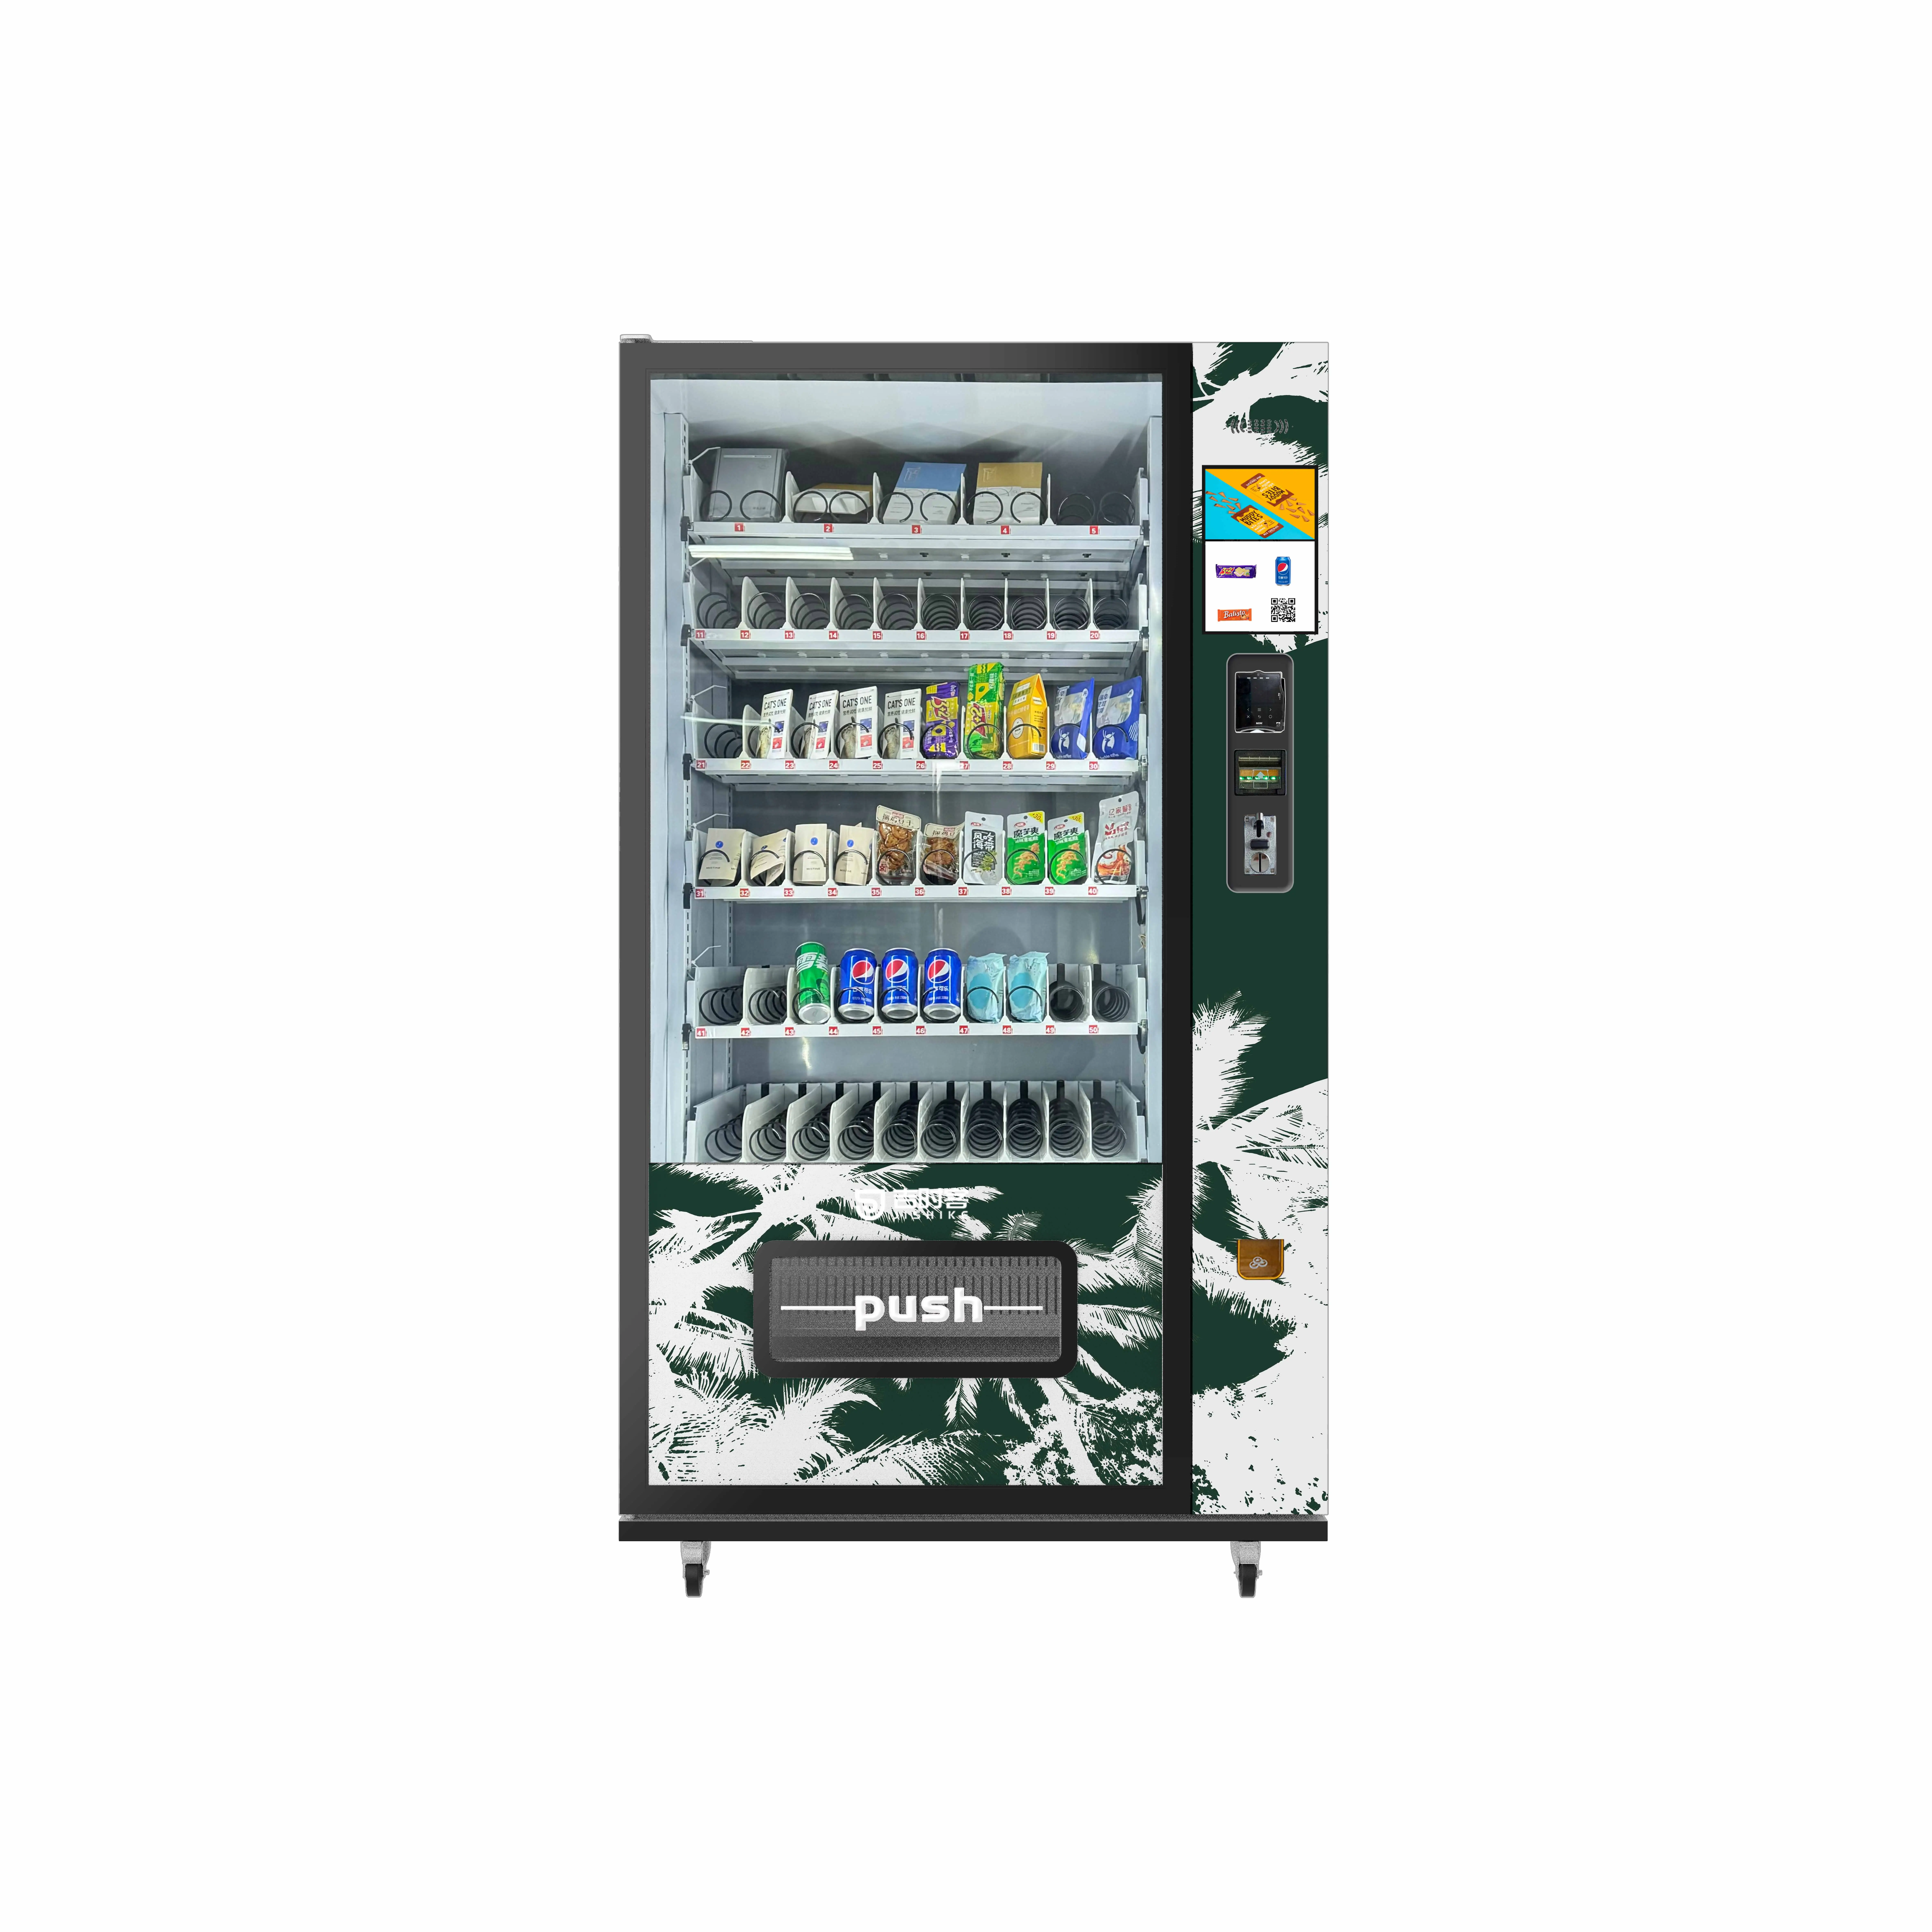 Most Popular Automatic Machine 10.1 Inches Screen Combo Distributeur Automatique Vending Machine With Ce Fcc